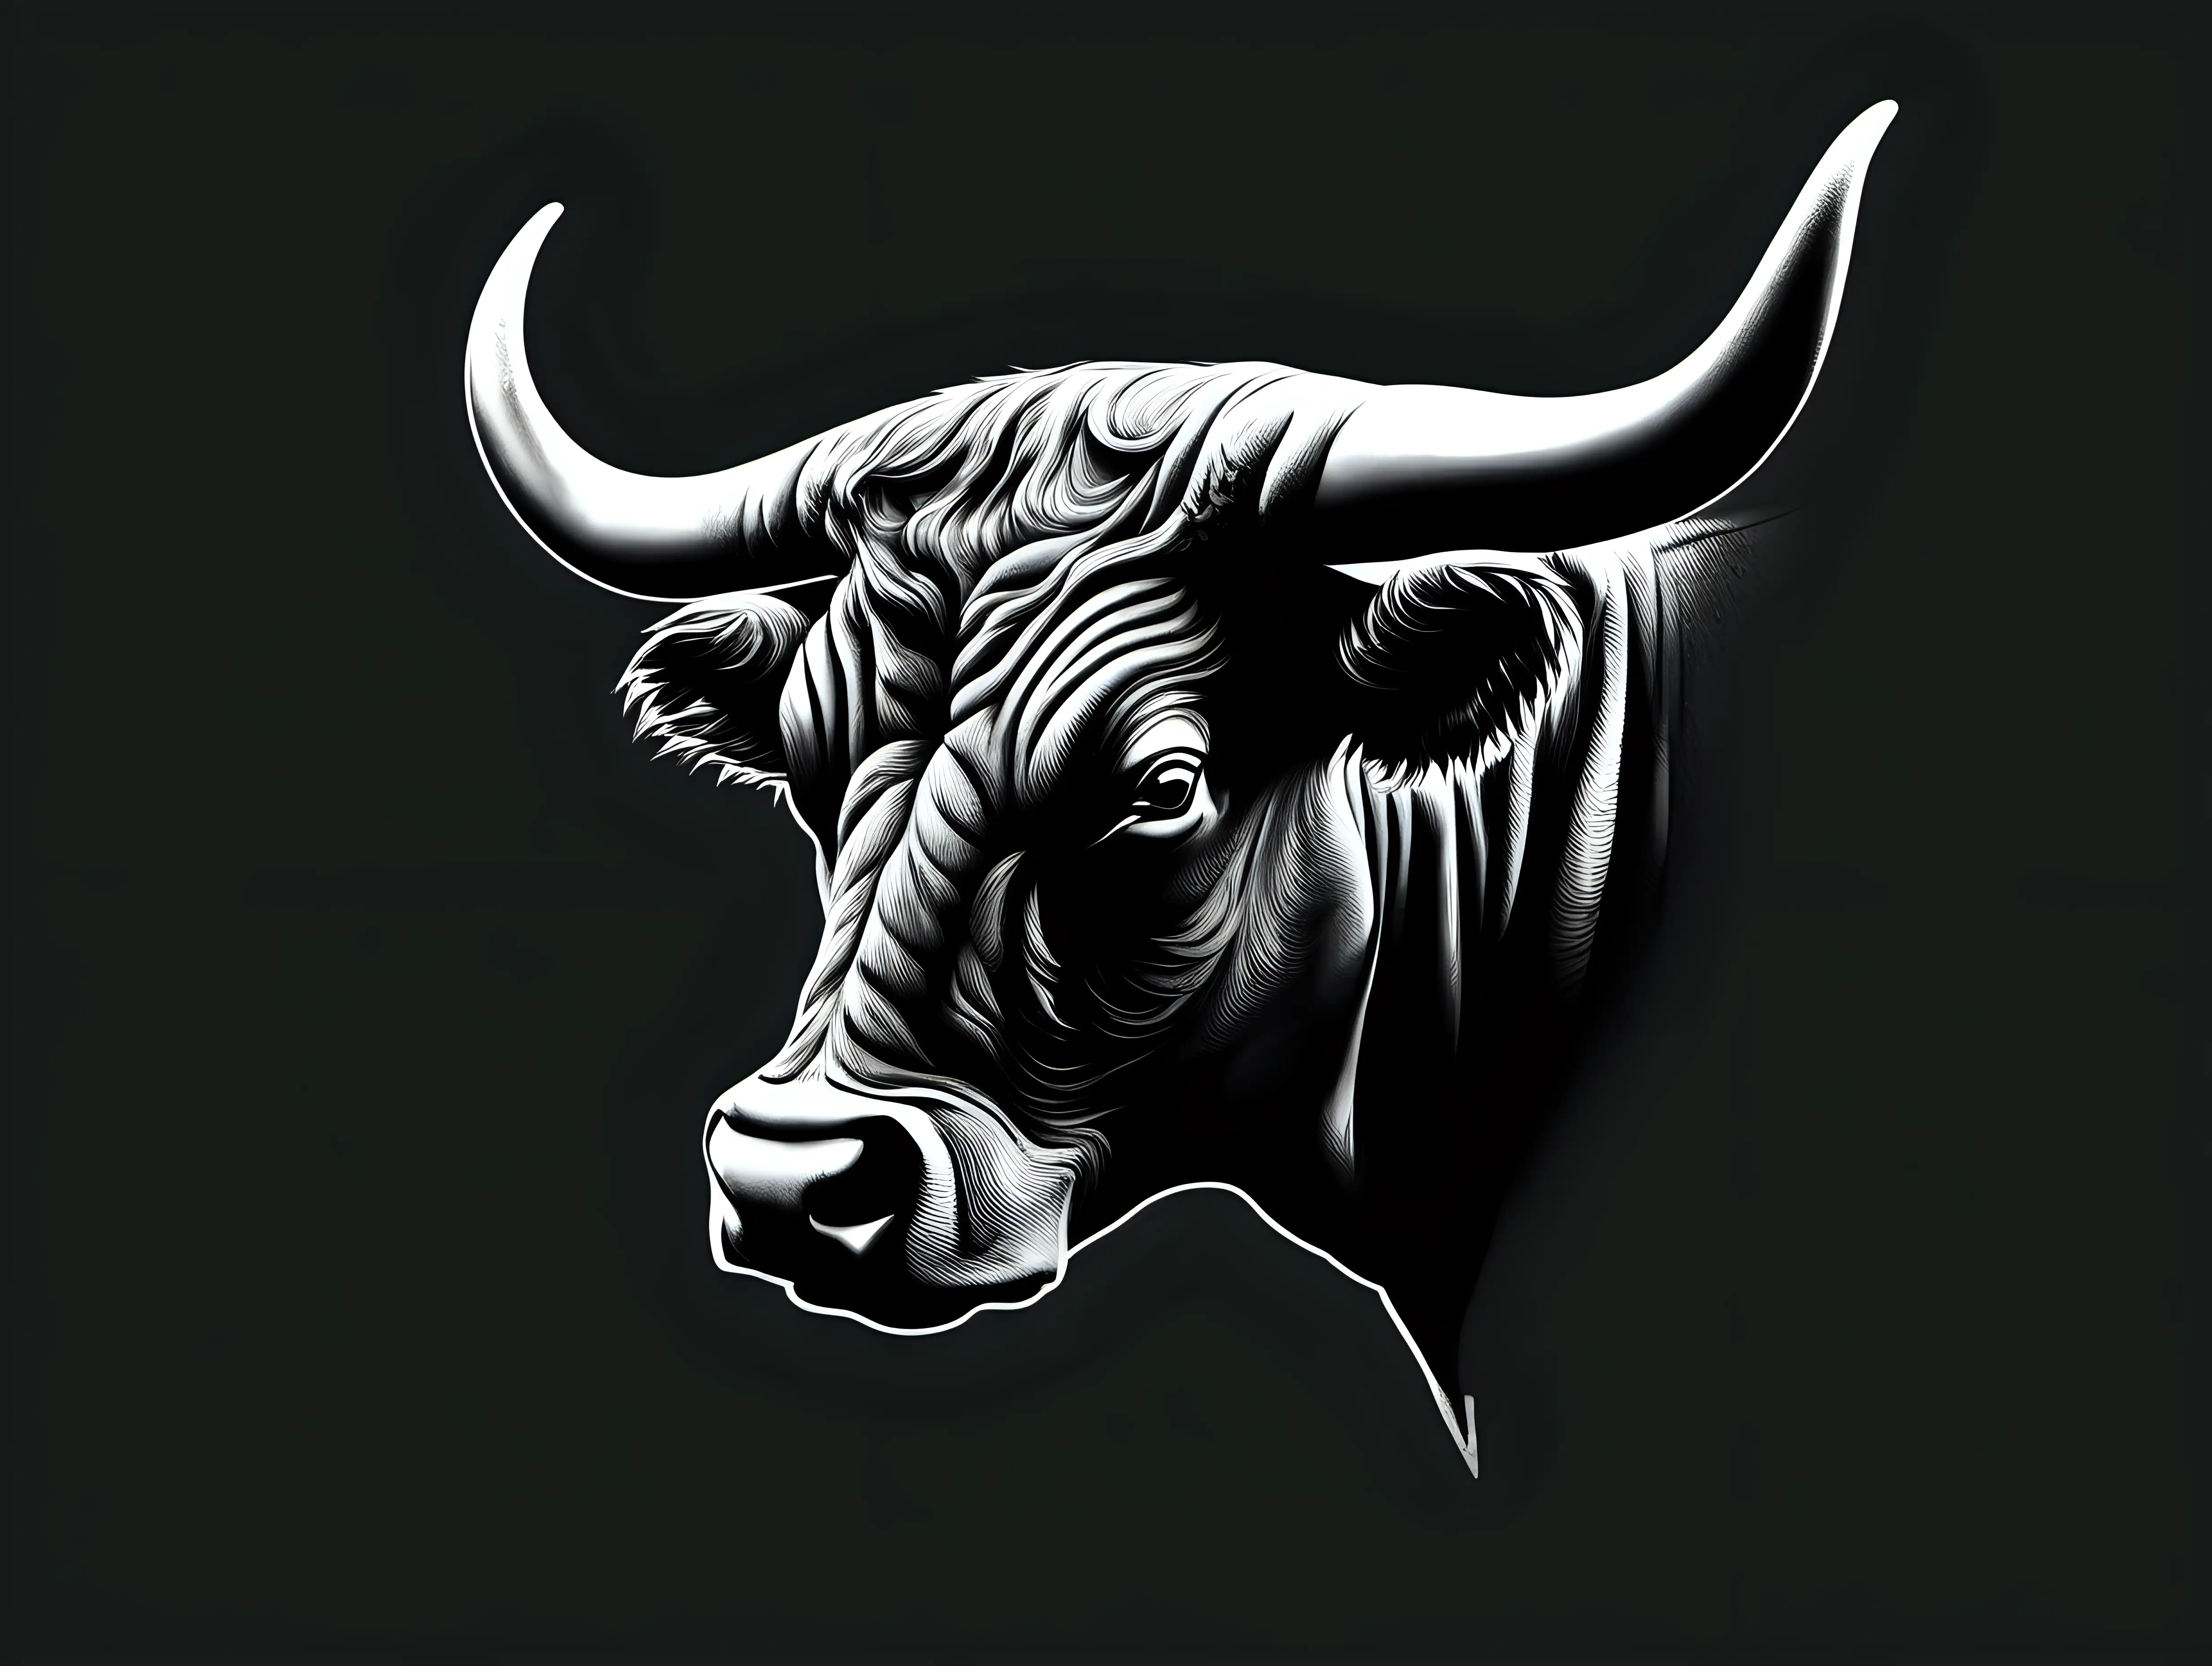 Realistic Bulls Head Sculpture on Black Background